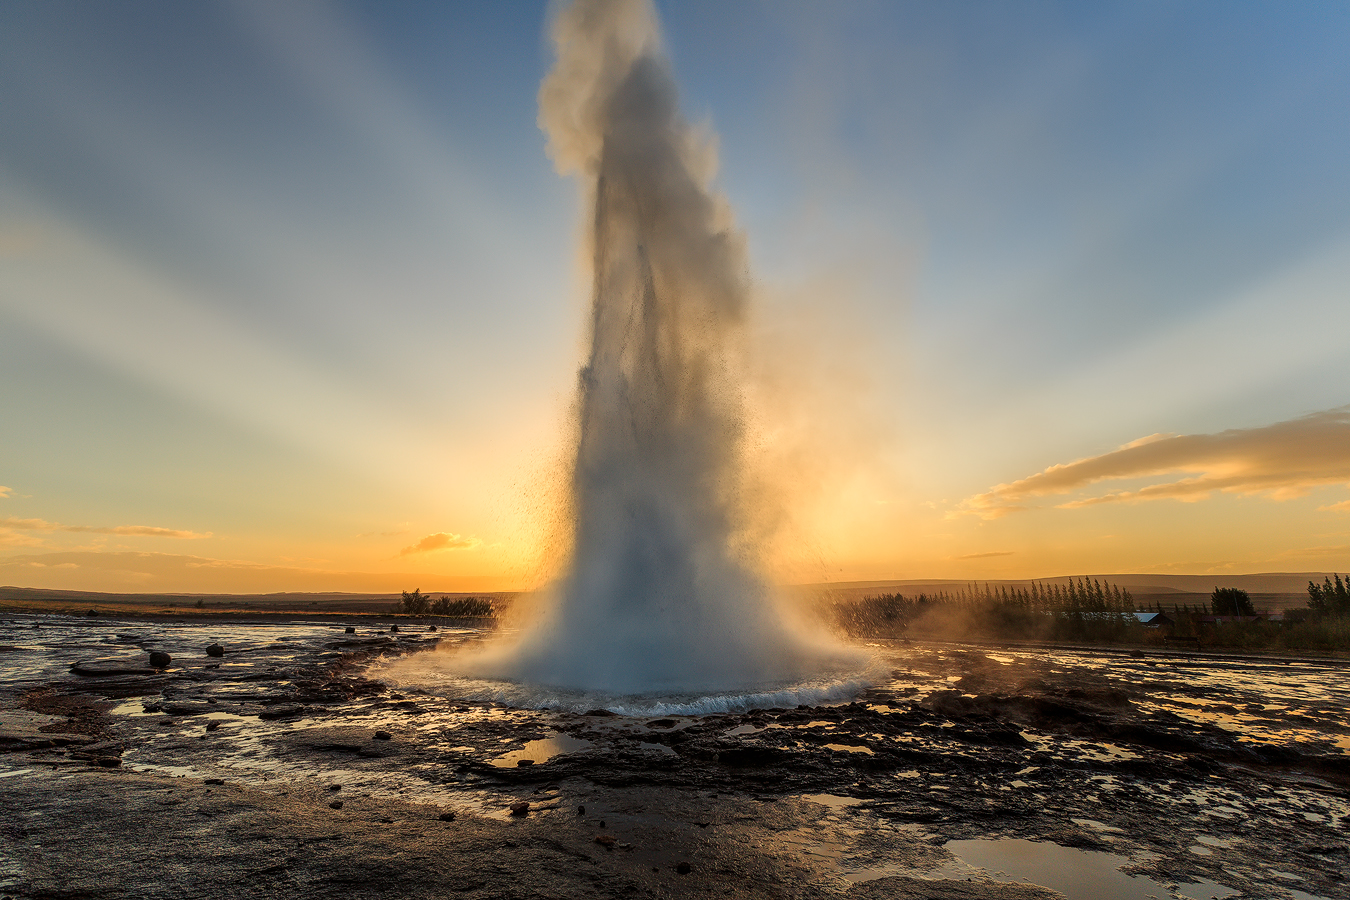 Lo splendido geyser Strokkur erutta nel paesaggio invernale.